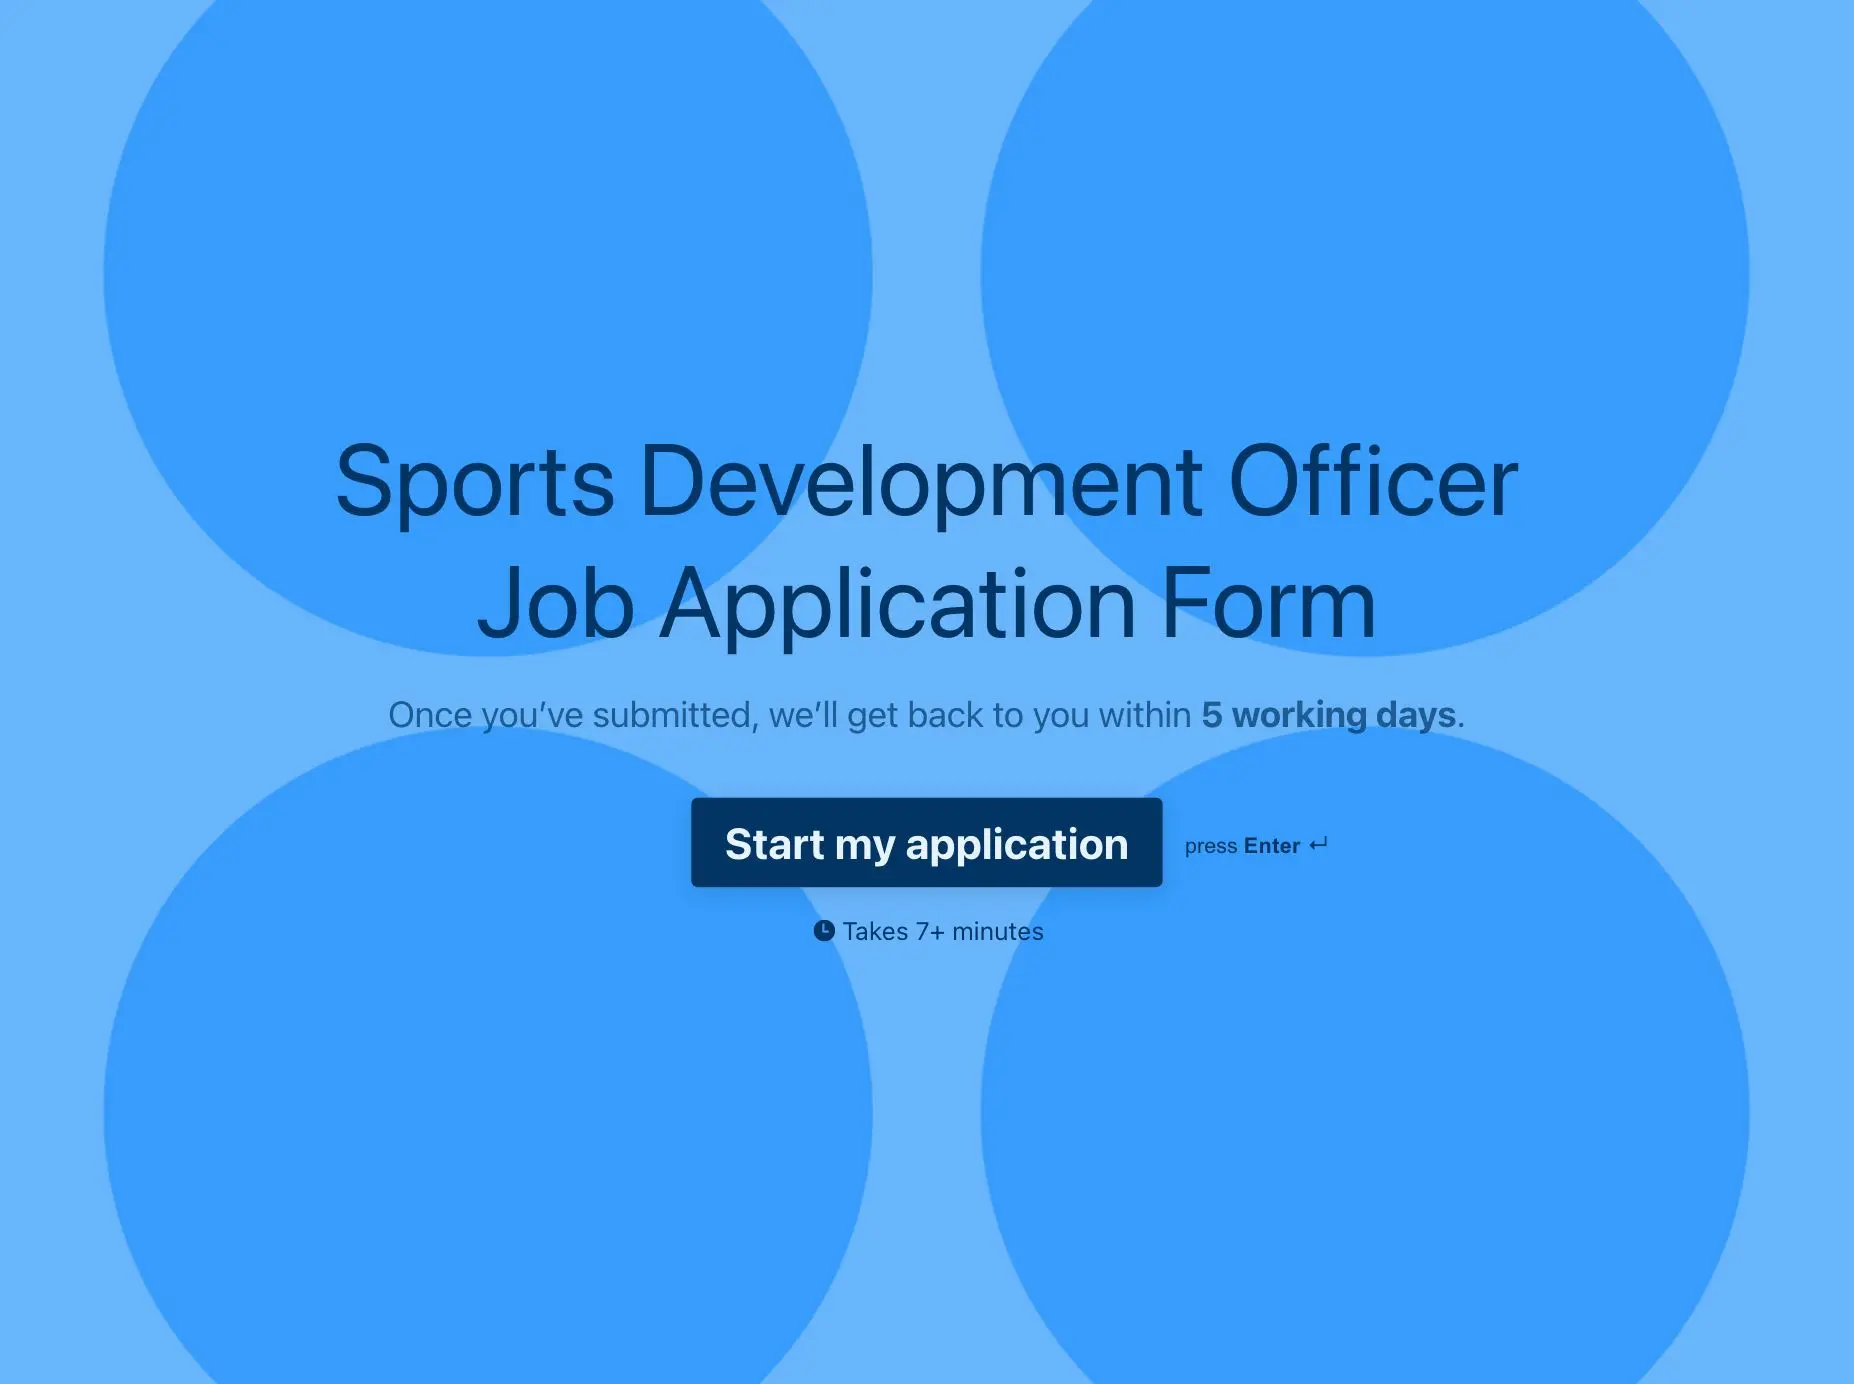 Sports Development Officer Job Application Form Template Hero